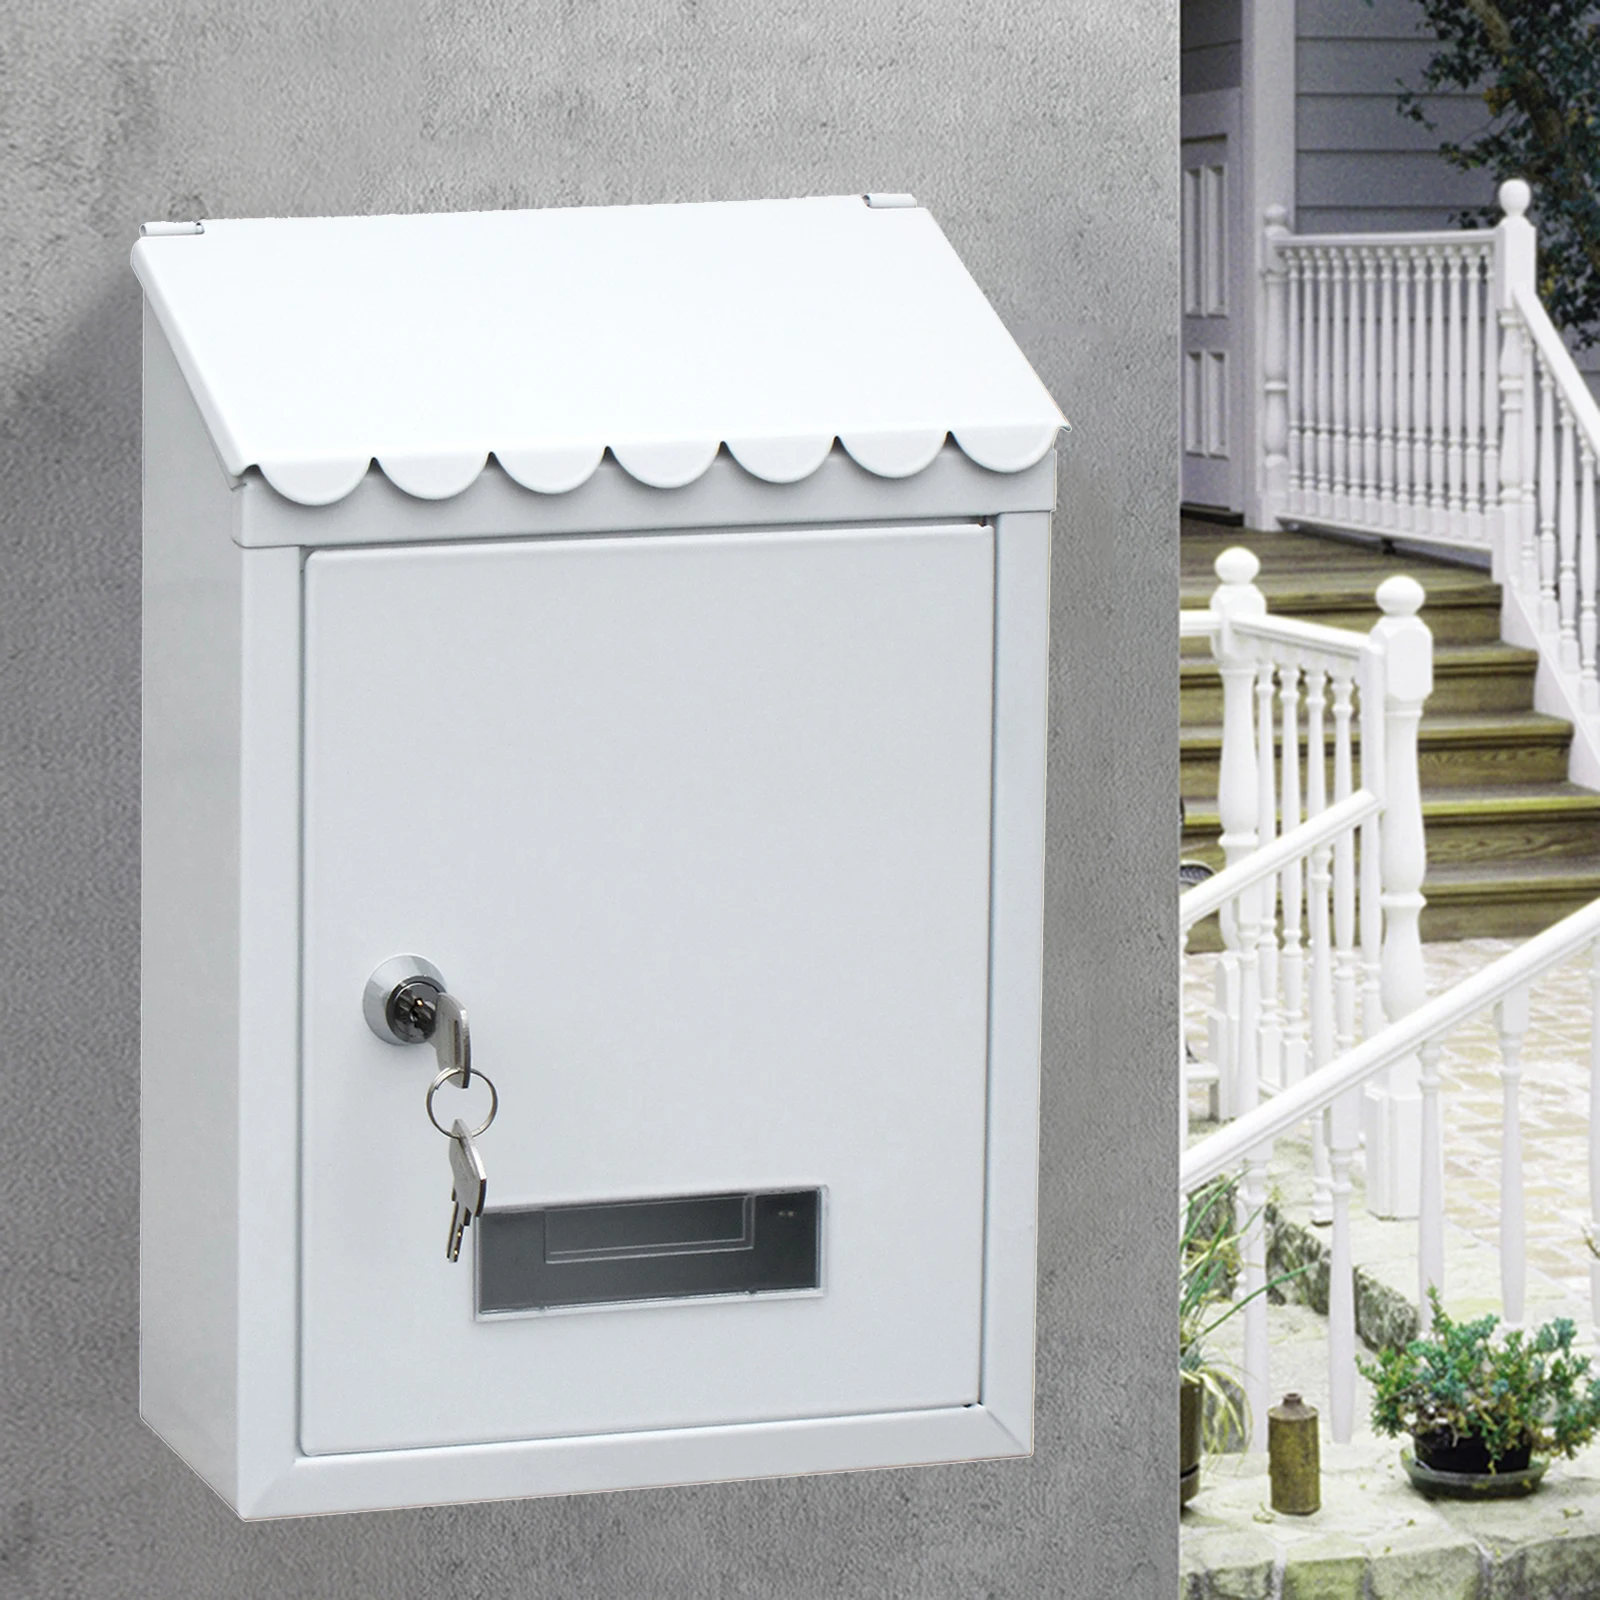 Metal Rustproof Post Box Wall-Mounted Key Locking Premium Mailbox with Top-Loading Letter Slot Drop Box Case